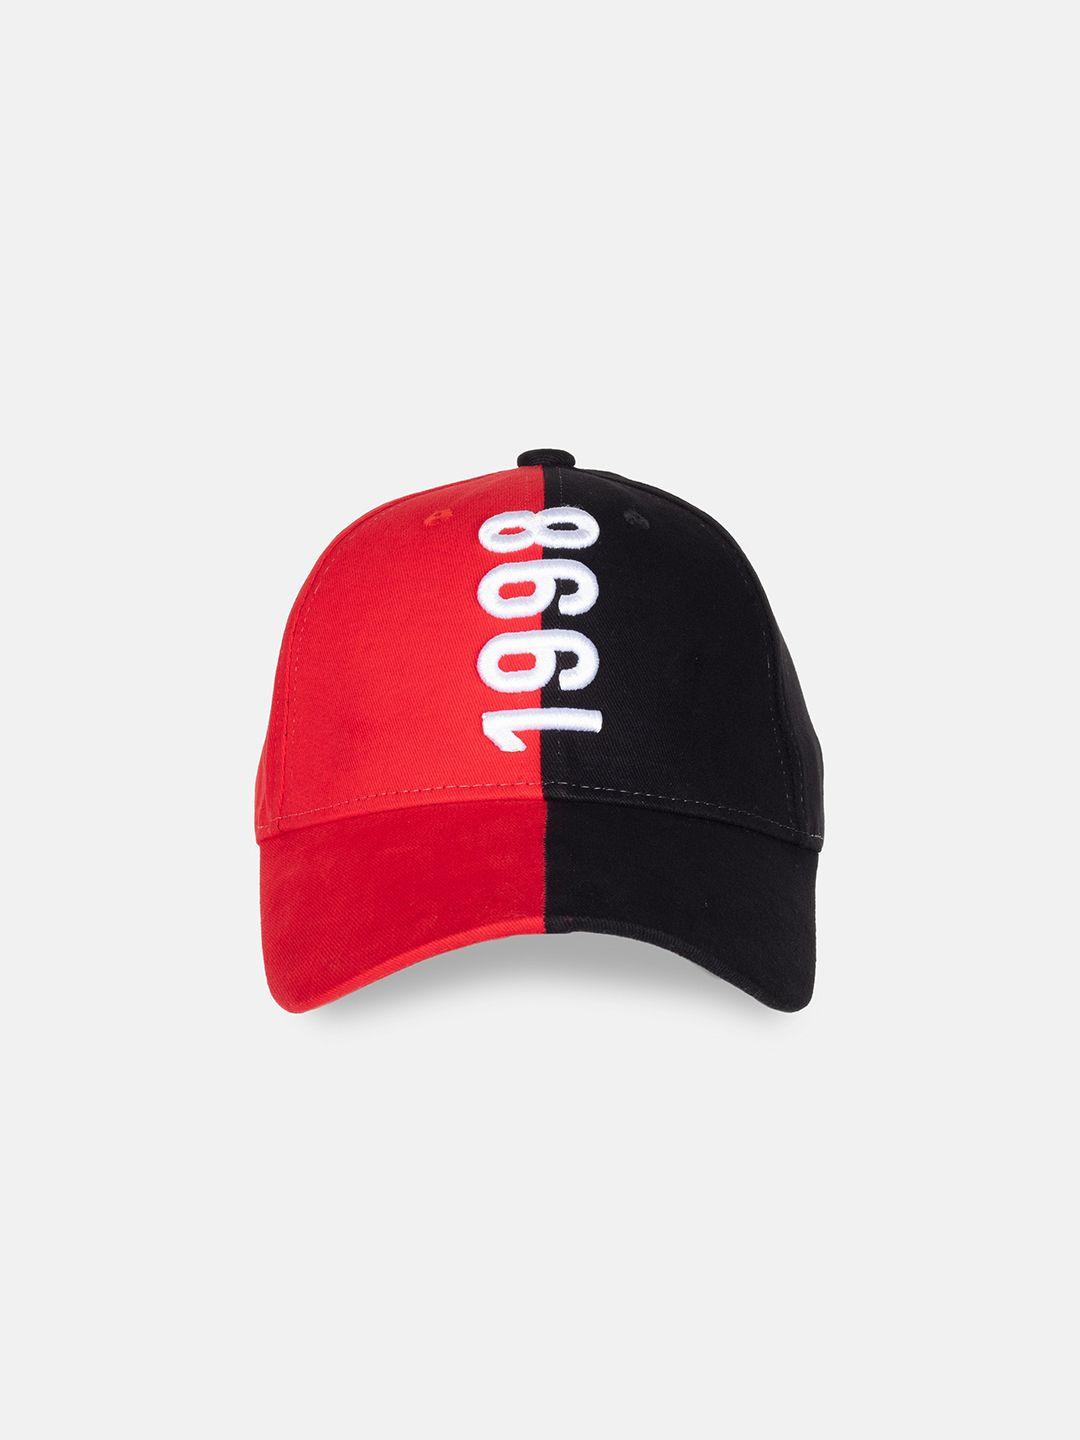 status quo men red & black embroidered baseball cap